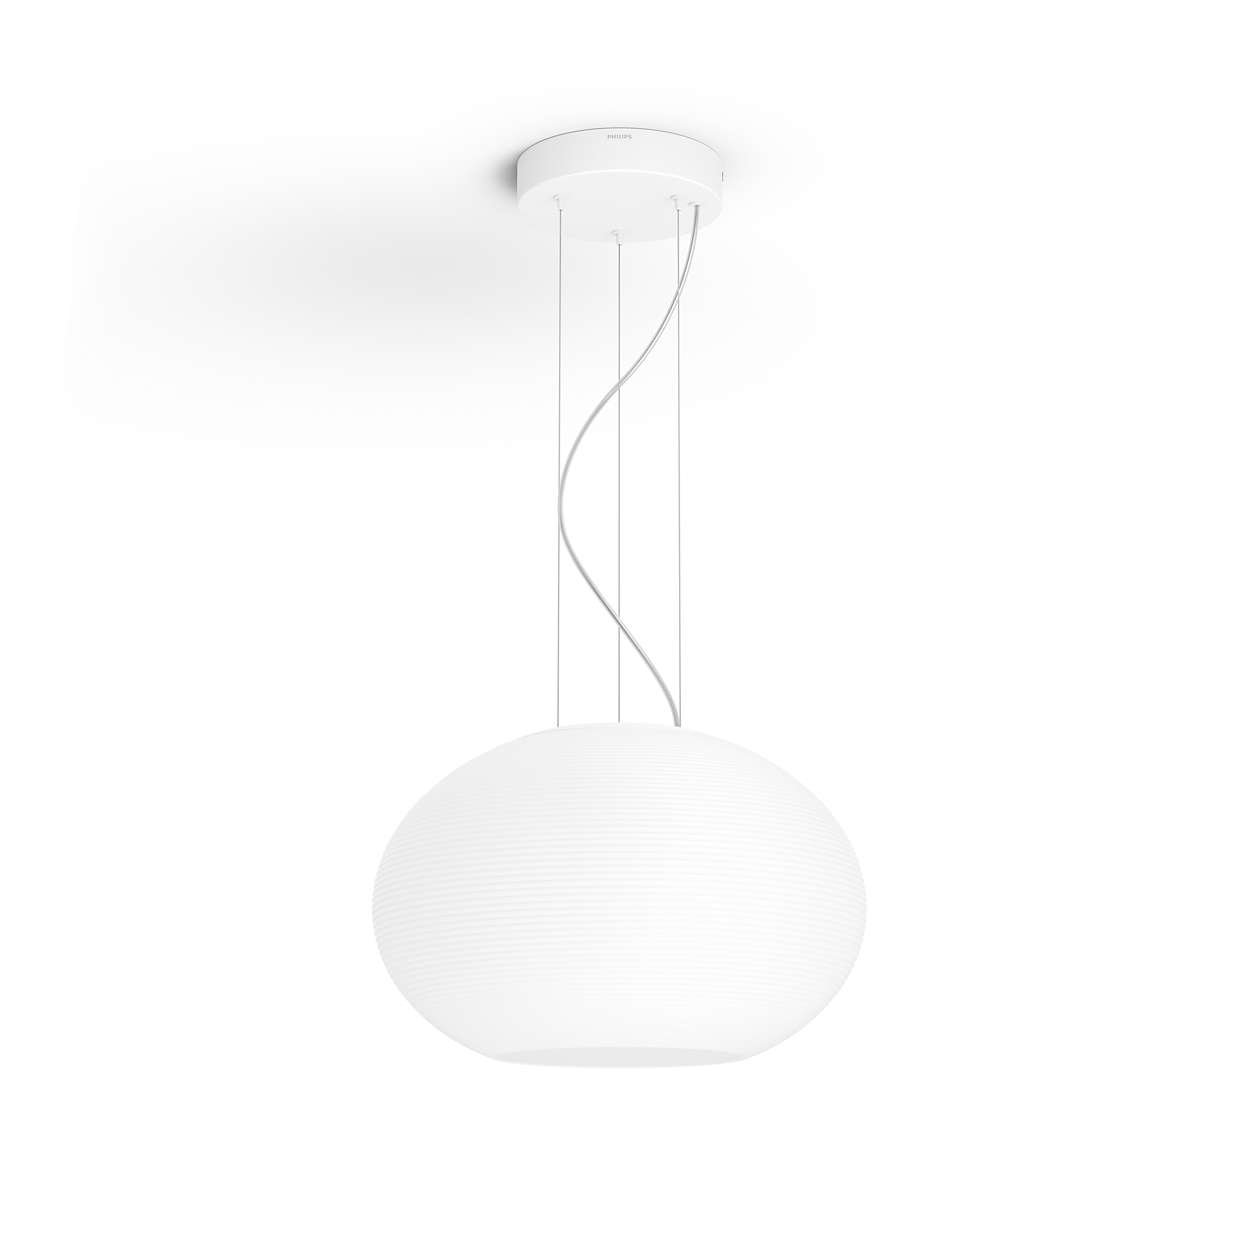 PHILIPS Flourish Závěsné svítidlo,  Hue White and color ambiance,  230V,  1x39.5W integr.LED,  Bílá5 